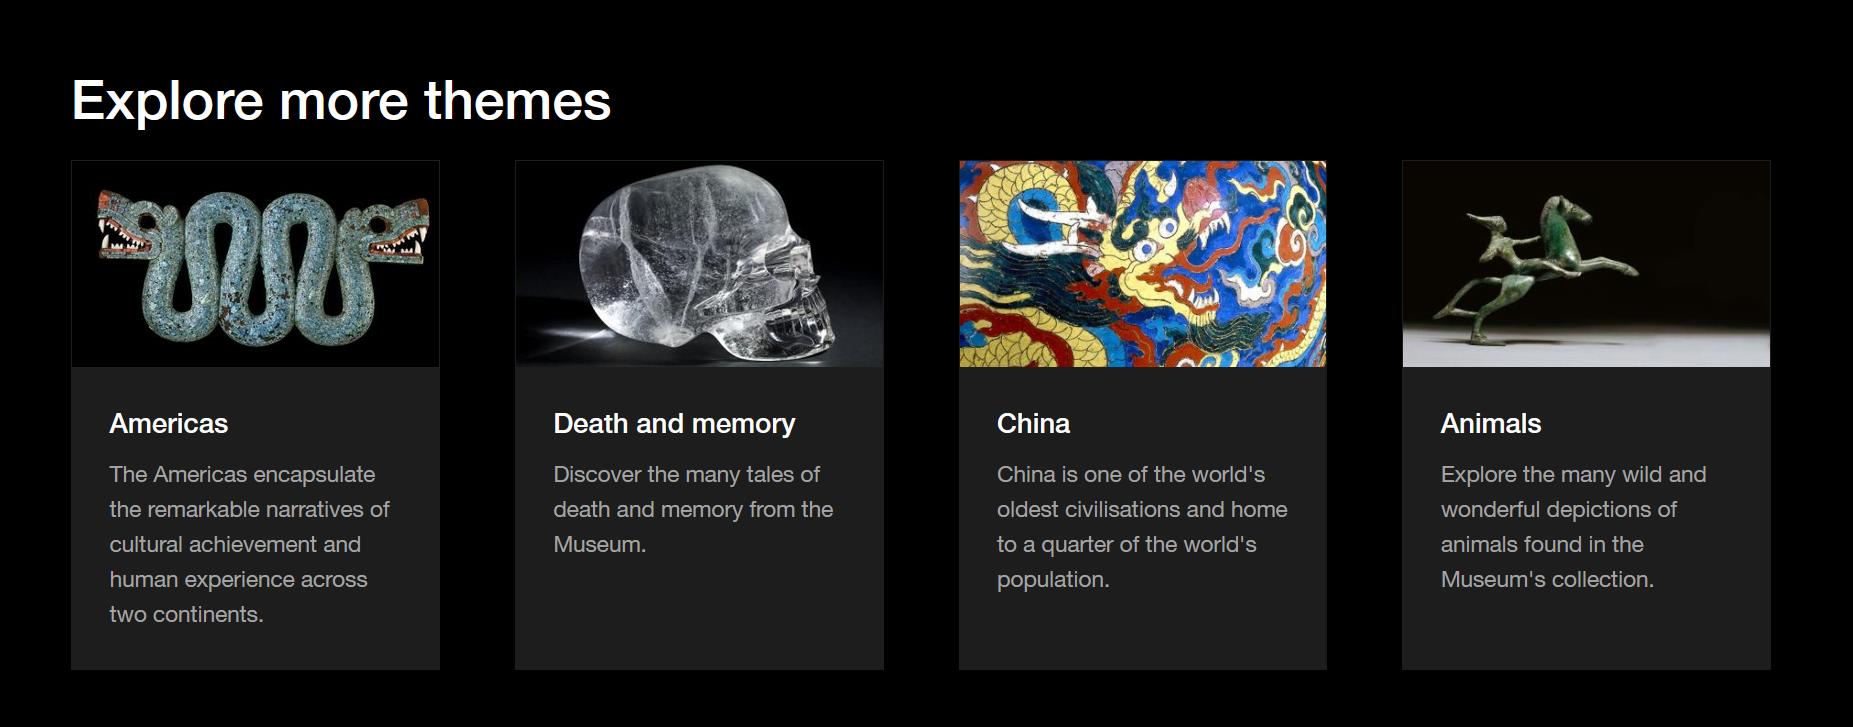 Британский музей обновил свою онлайн-коллекцию